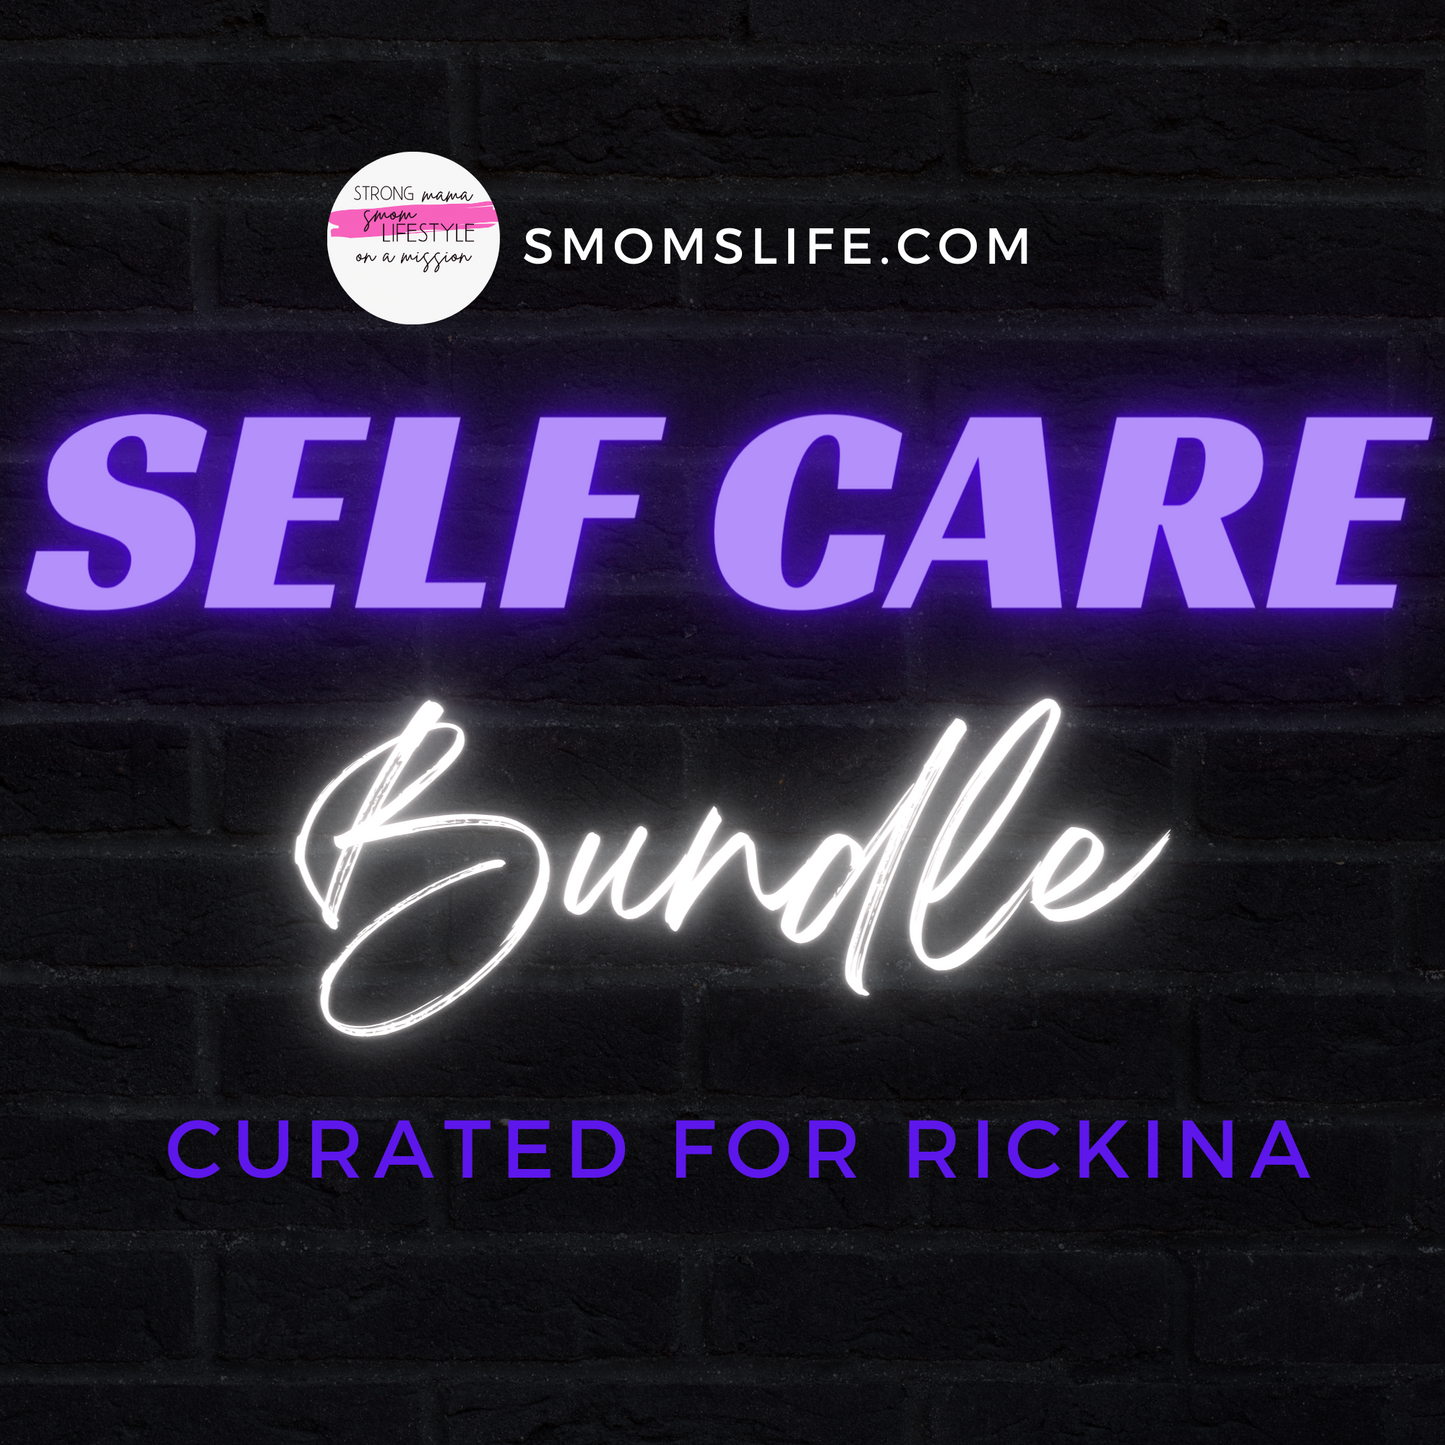 VIP Self Care Bundle Reserved for Rickina